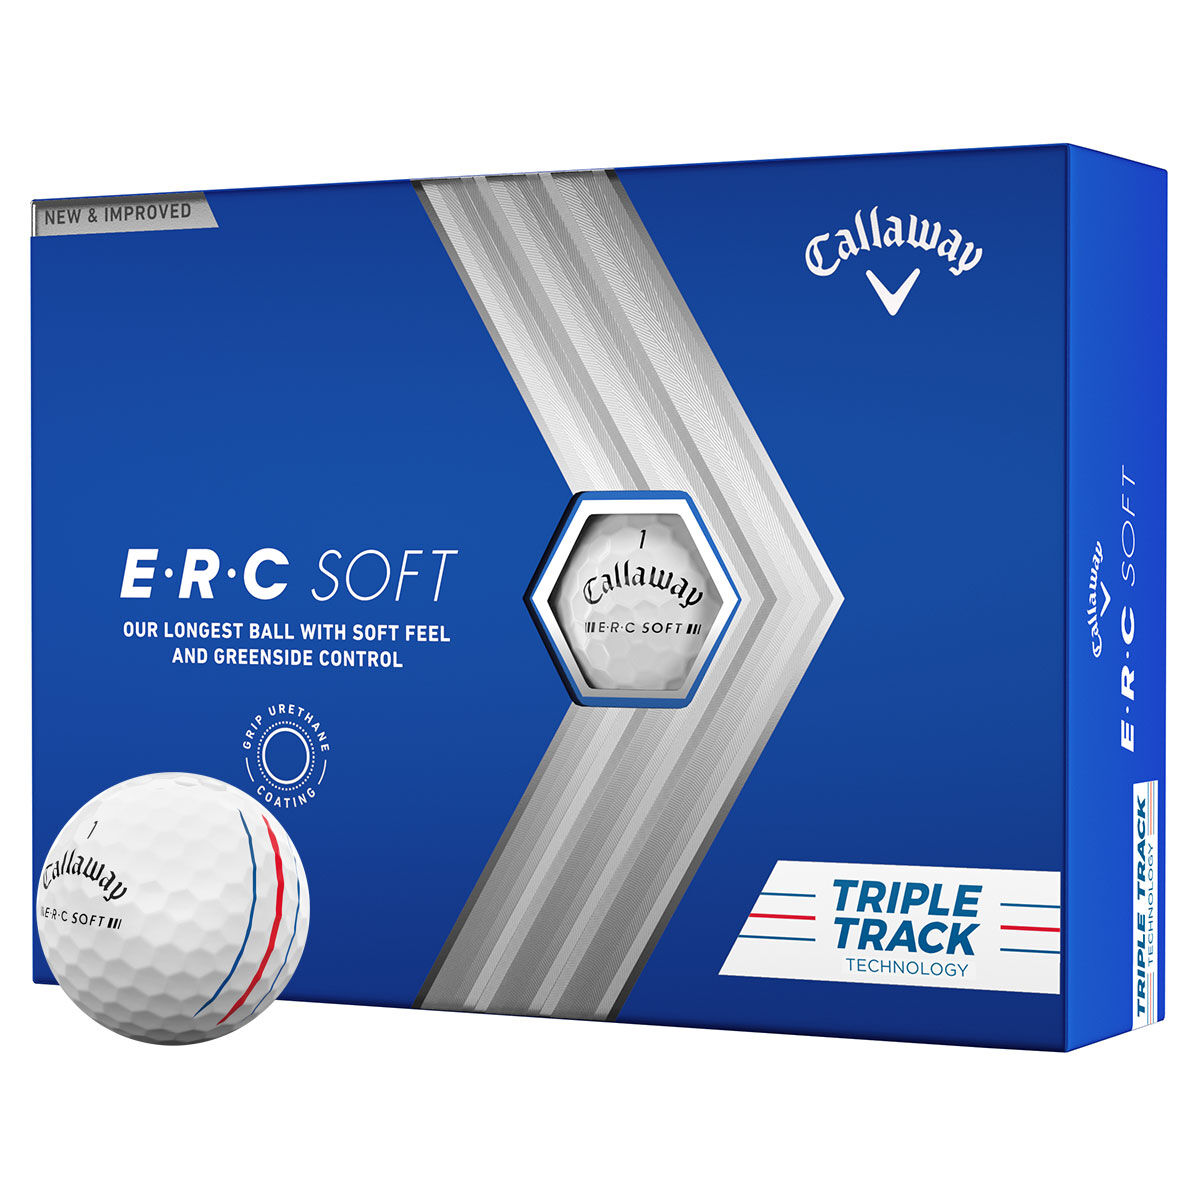 Callaway Golf Golf Ball, White E.R.C Soft Triple Track 12 Pack | American Golf, One Size